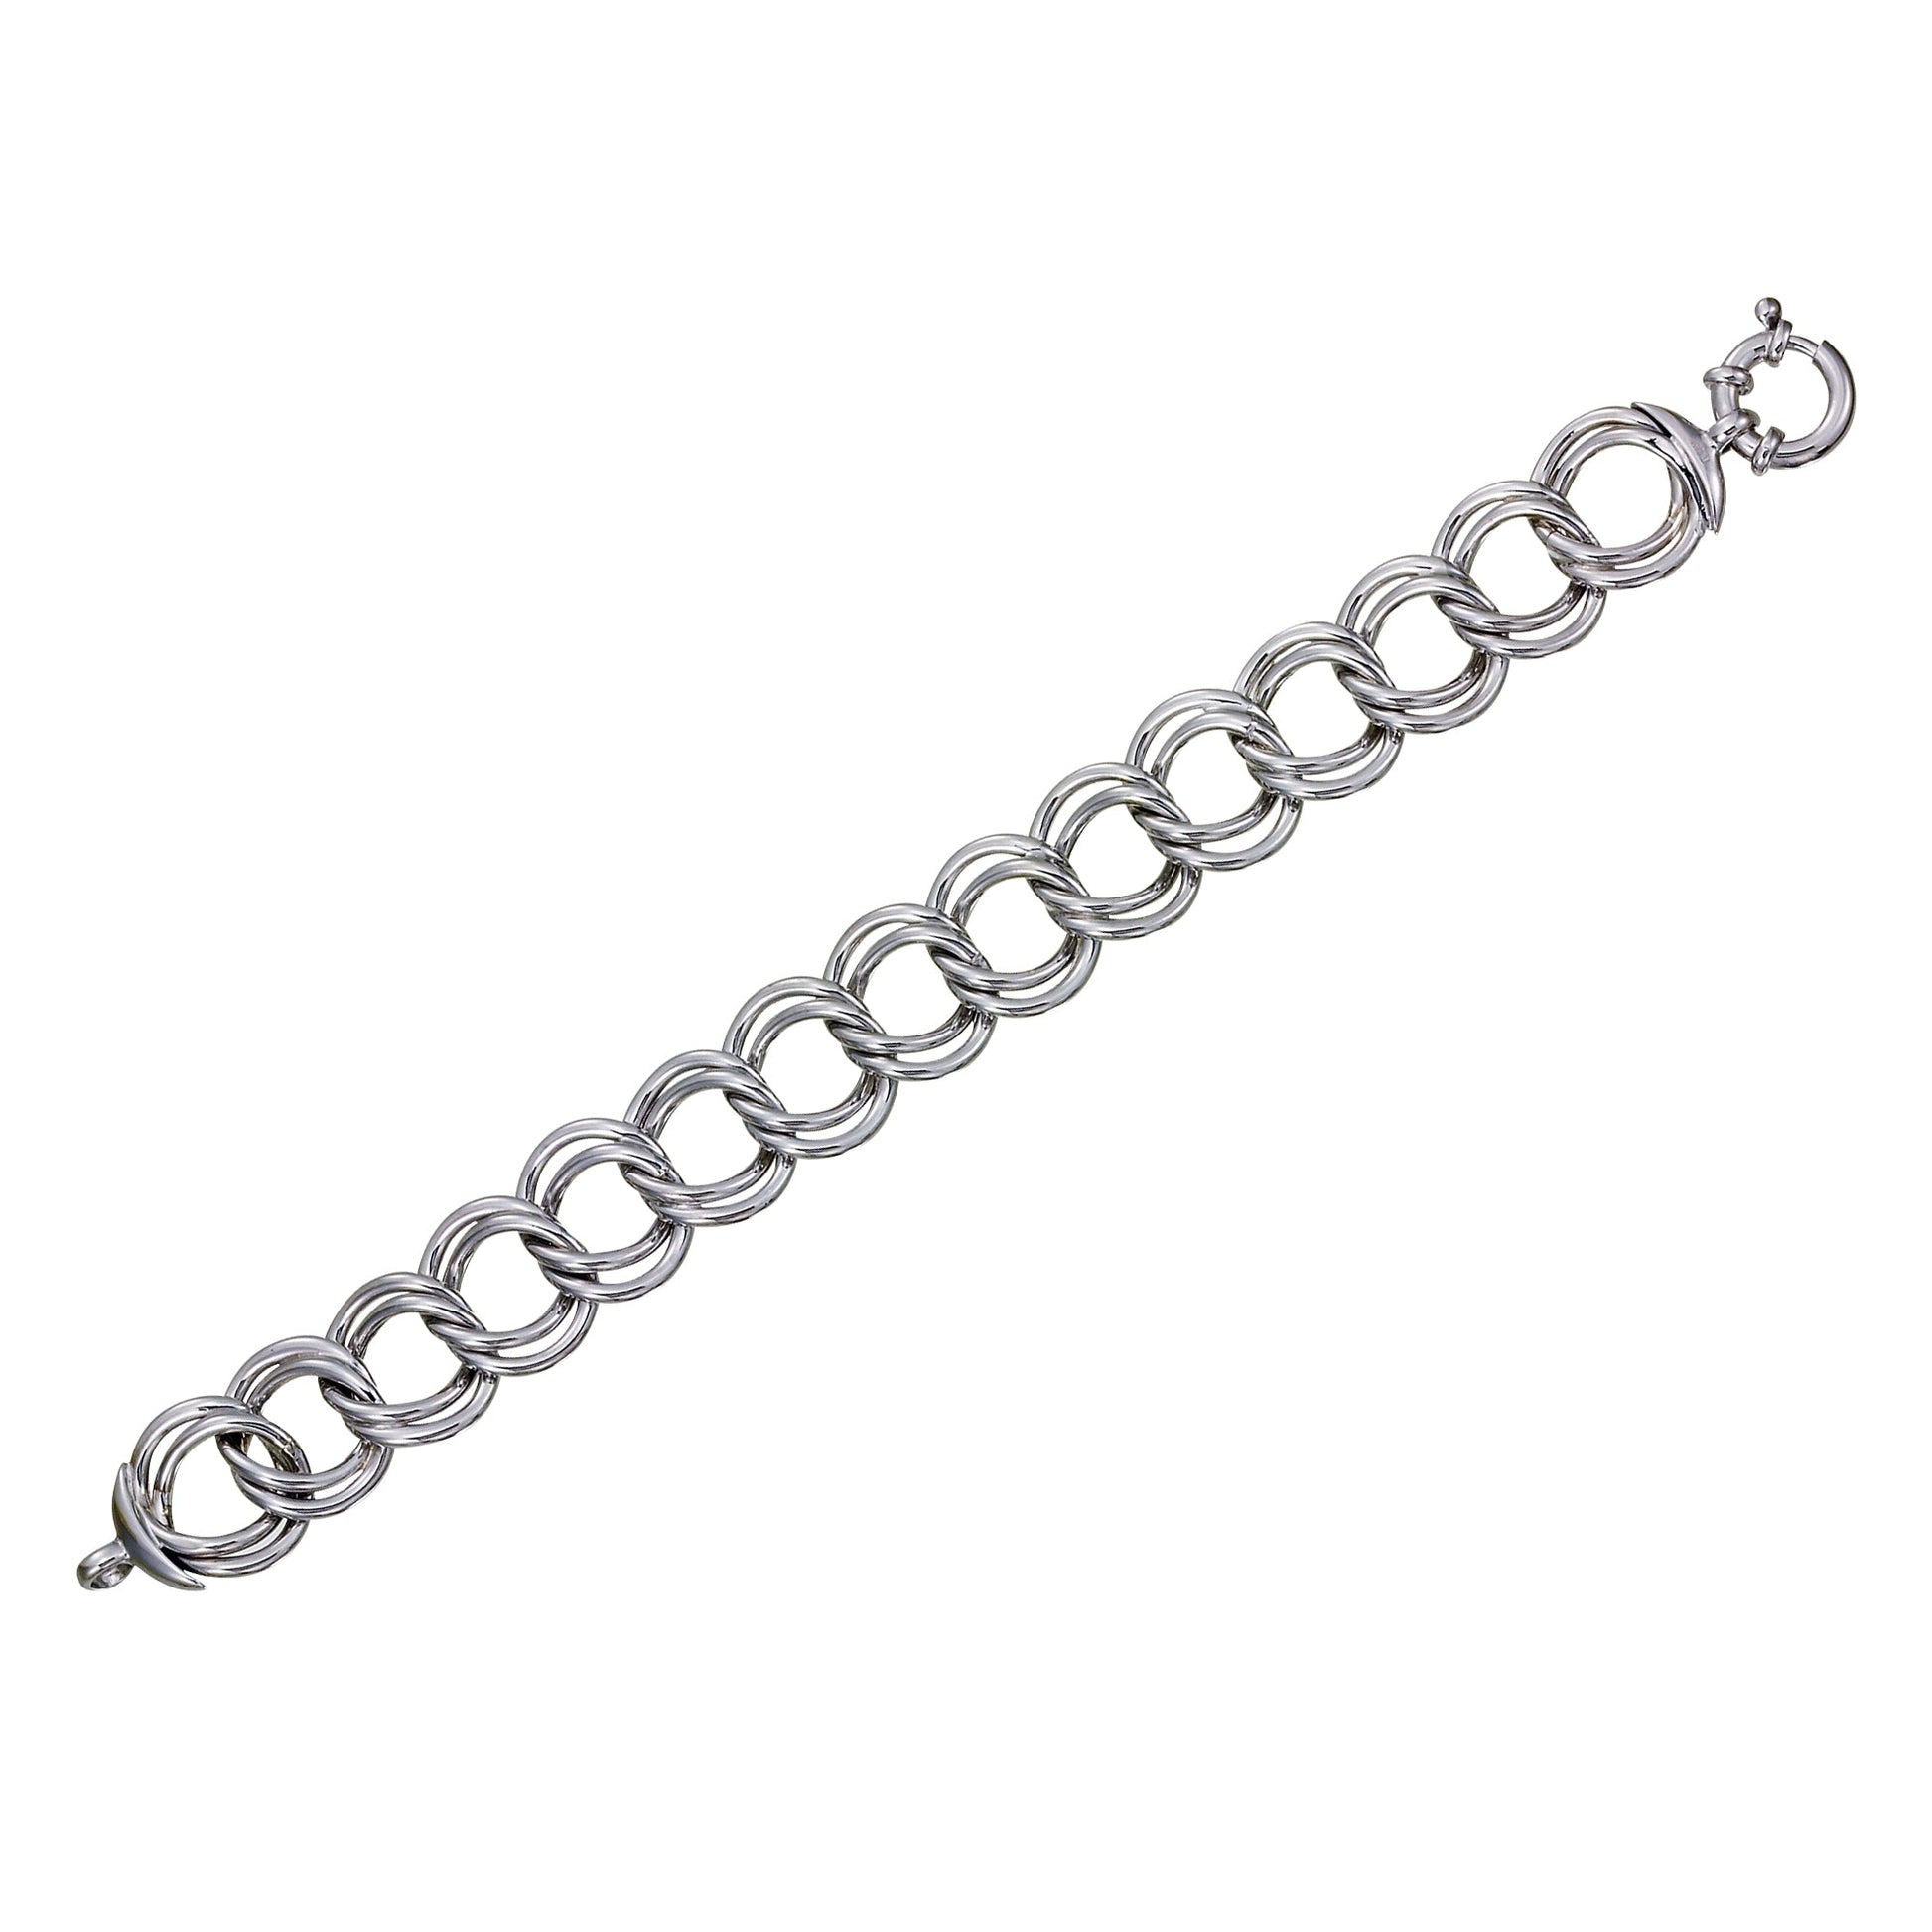 Franco Stellari Italian Sterling Silver Large Double Link Bracelet, 7.5"